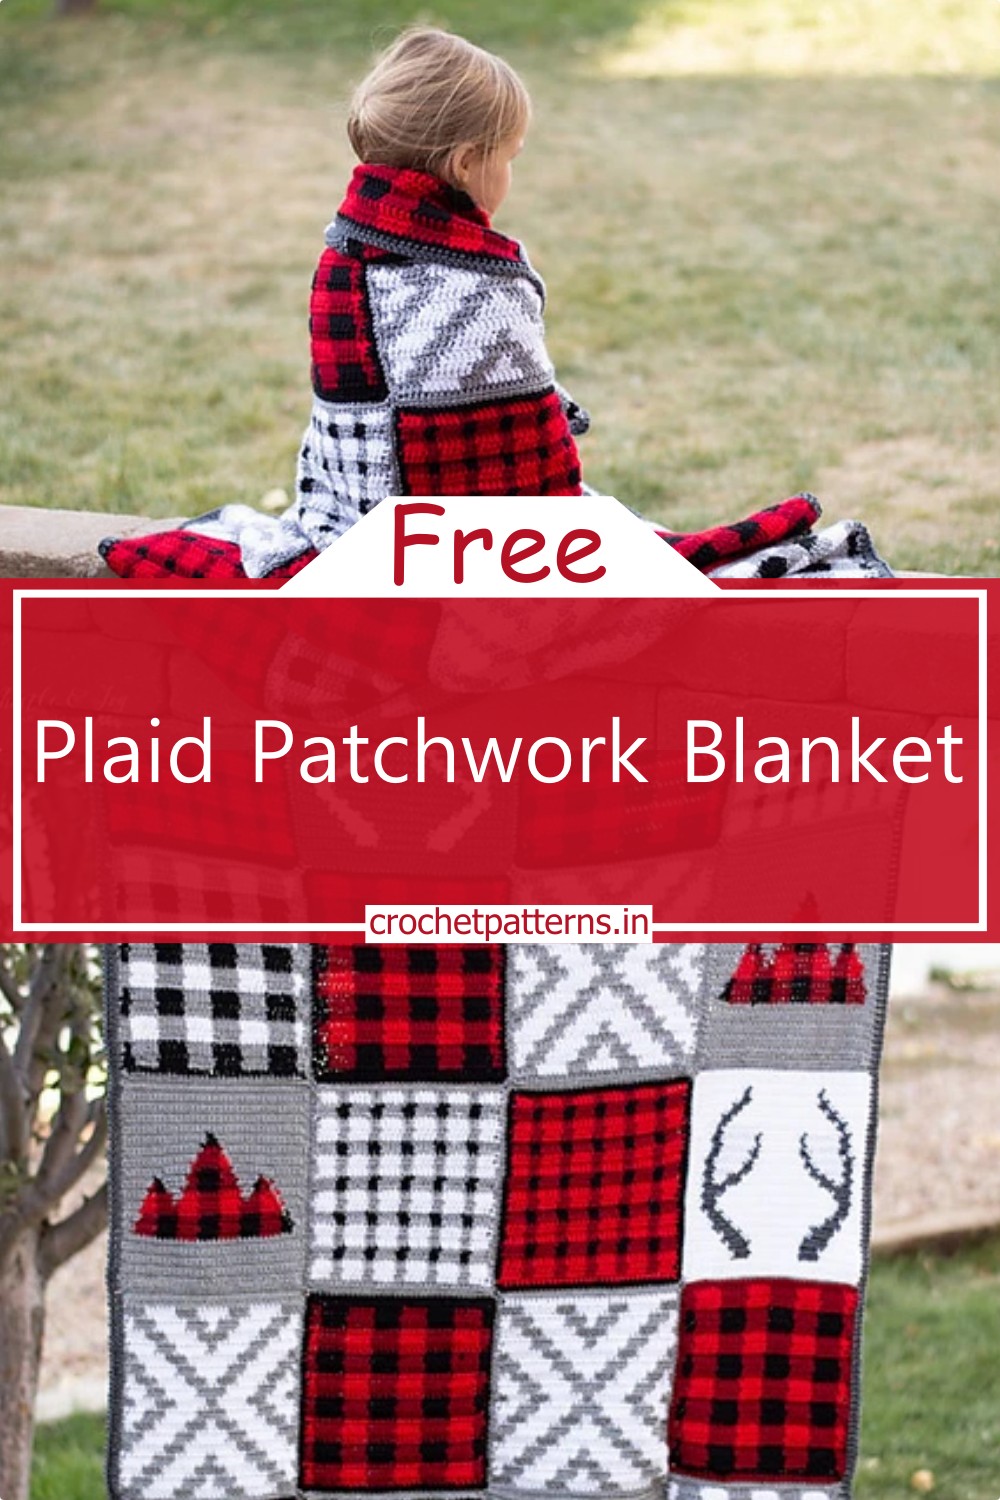 Plaid Patchwork Blanket